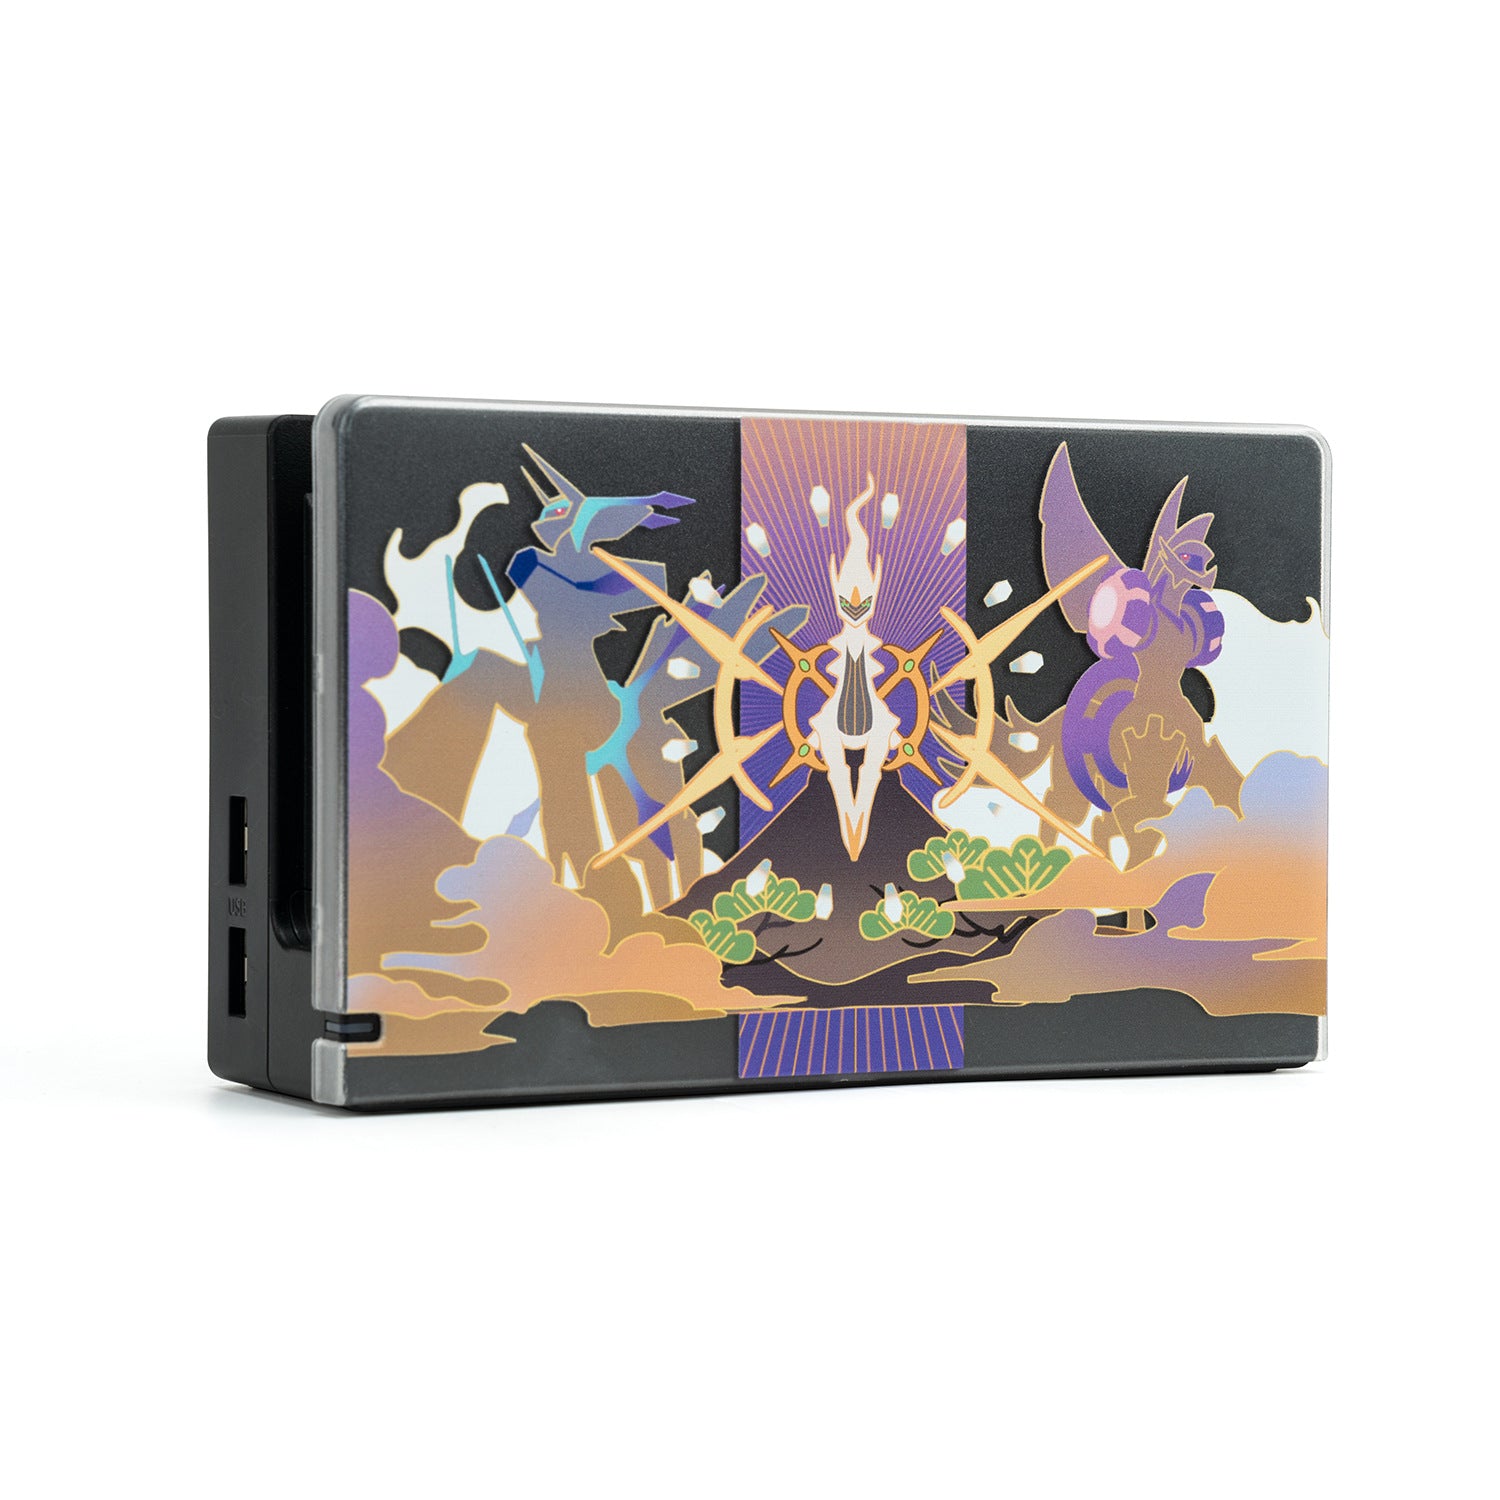 Nintendo Switch/OLED Case Set Pokémon Original Themed Design EtgSky – Legends: Arceus